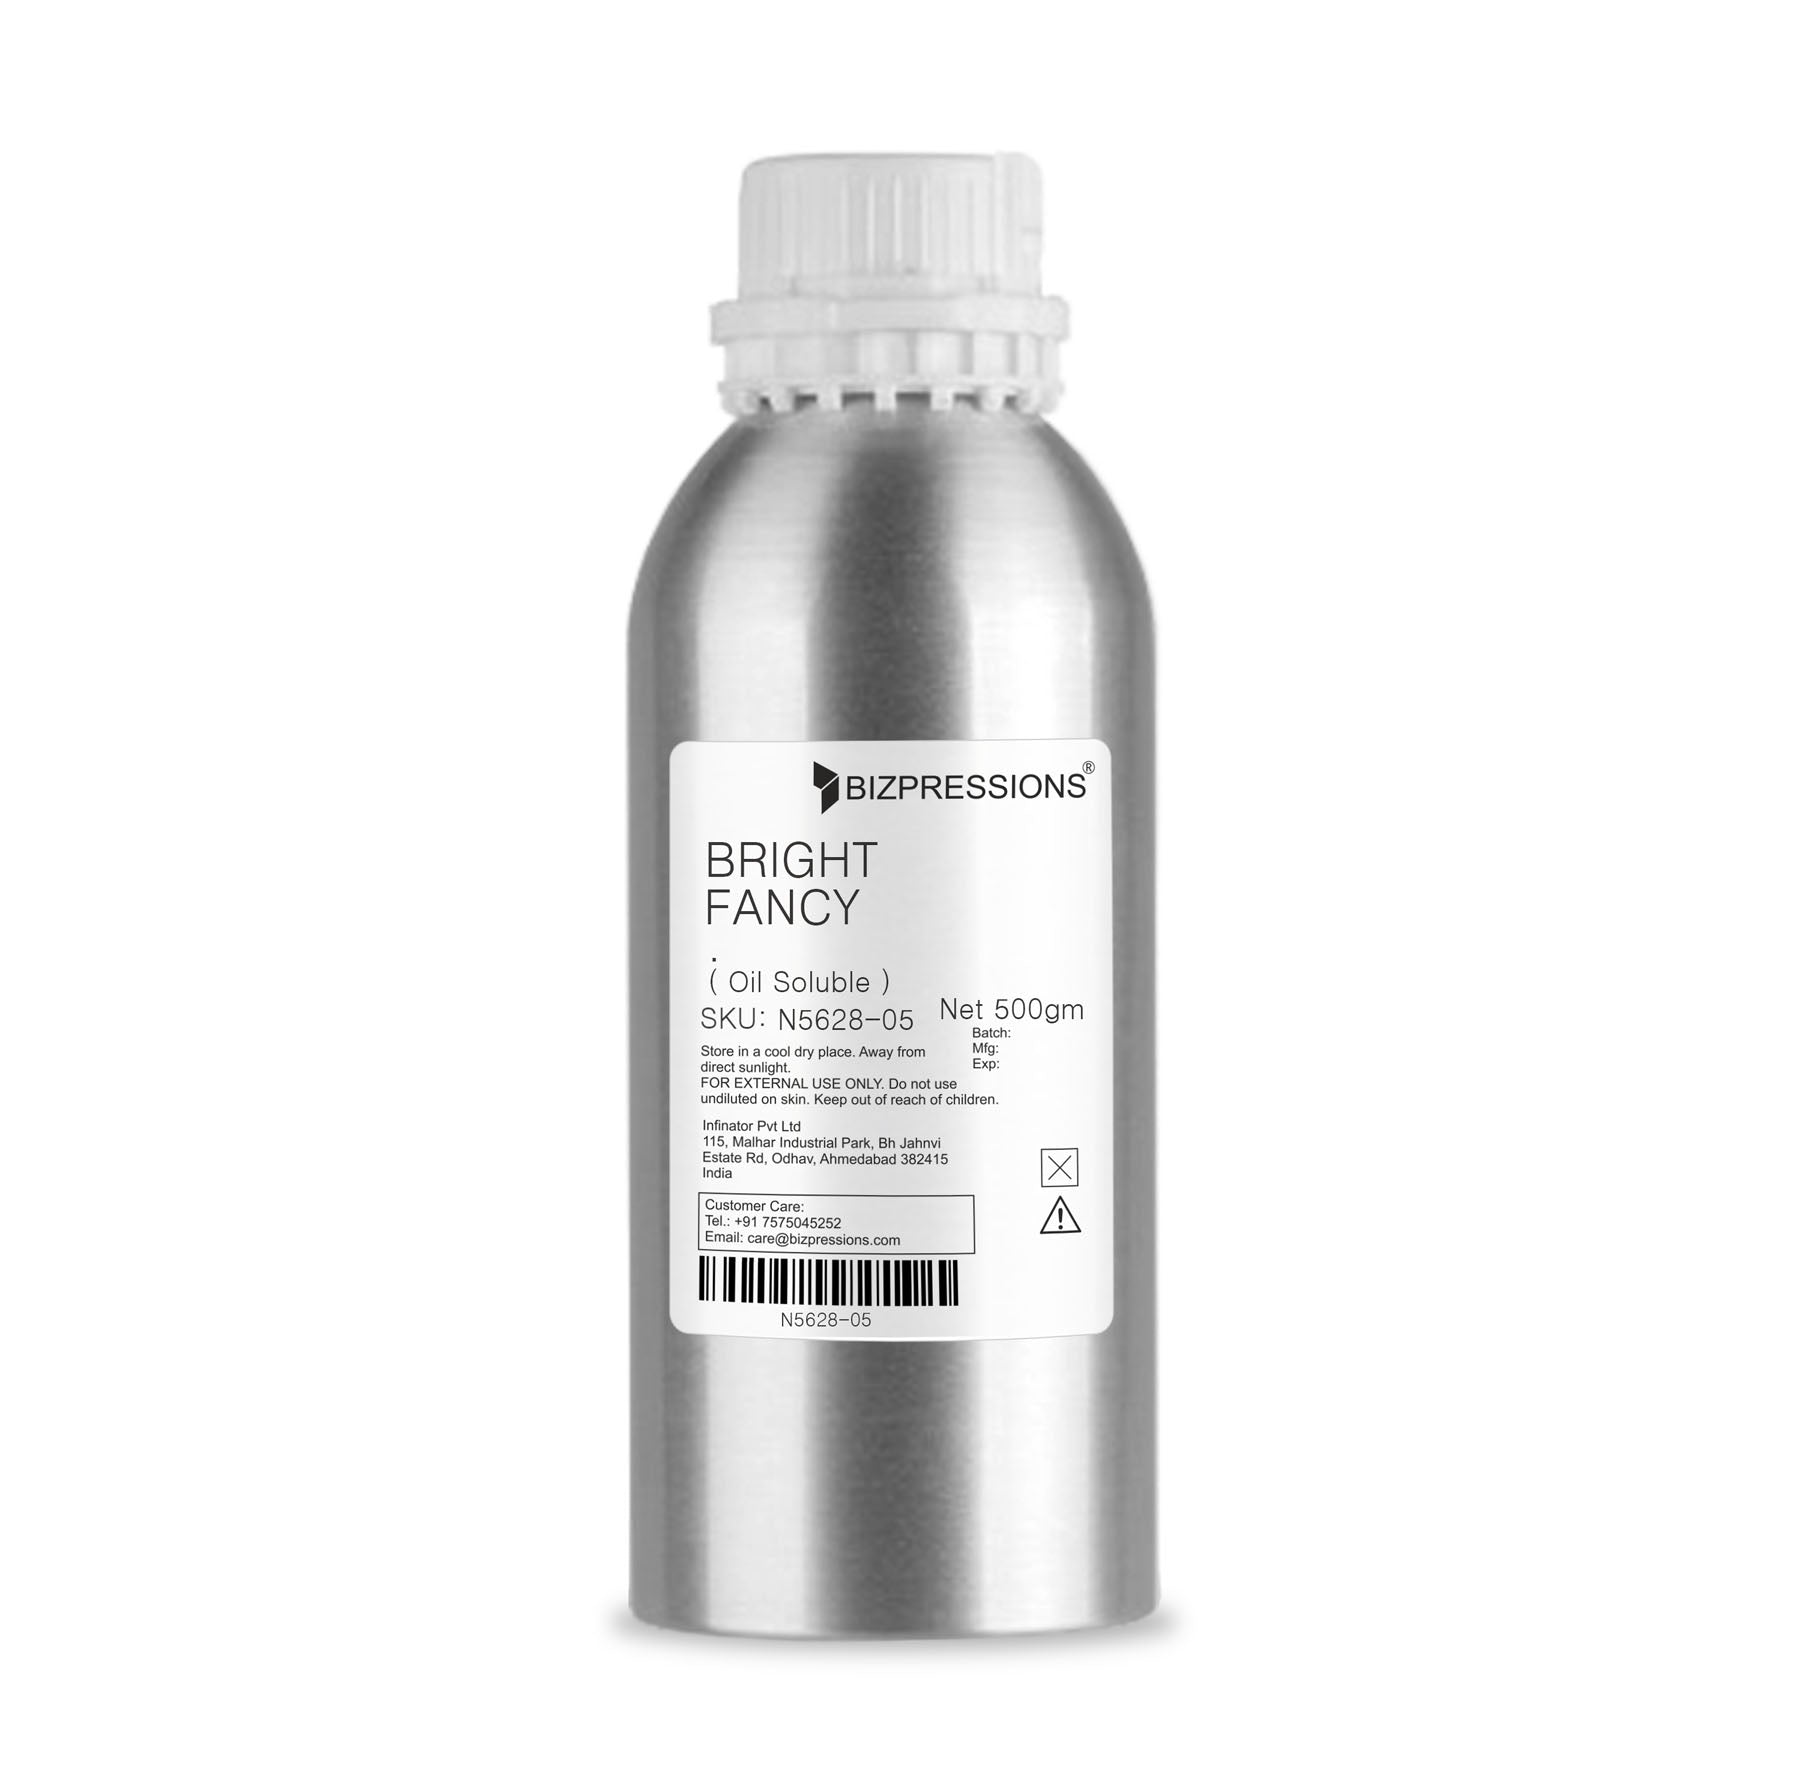 BRIGHT FANCY - Fragrance ( Oil Soluble ) - 500 gm